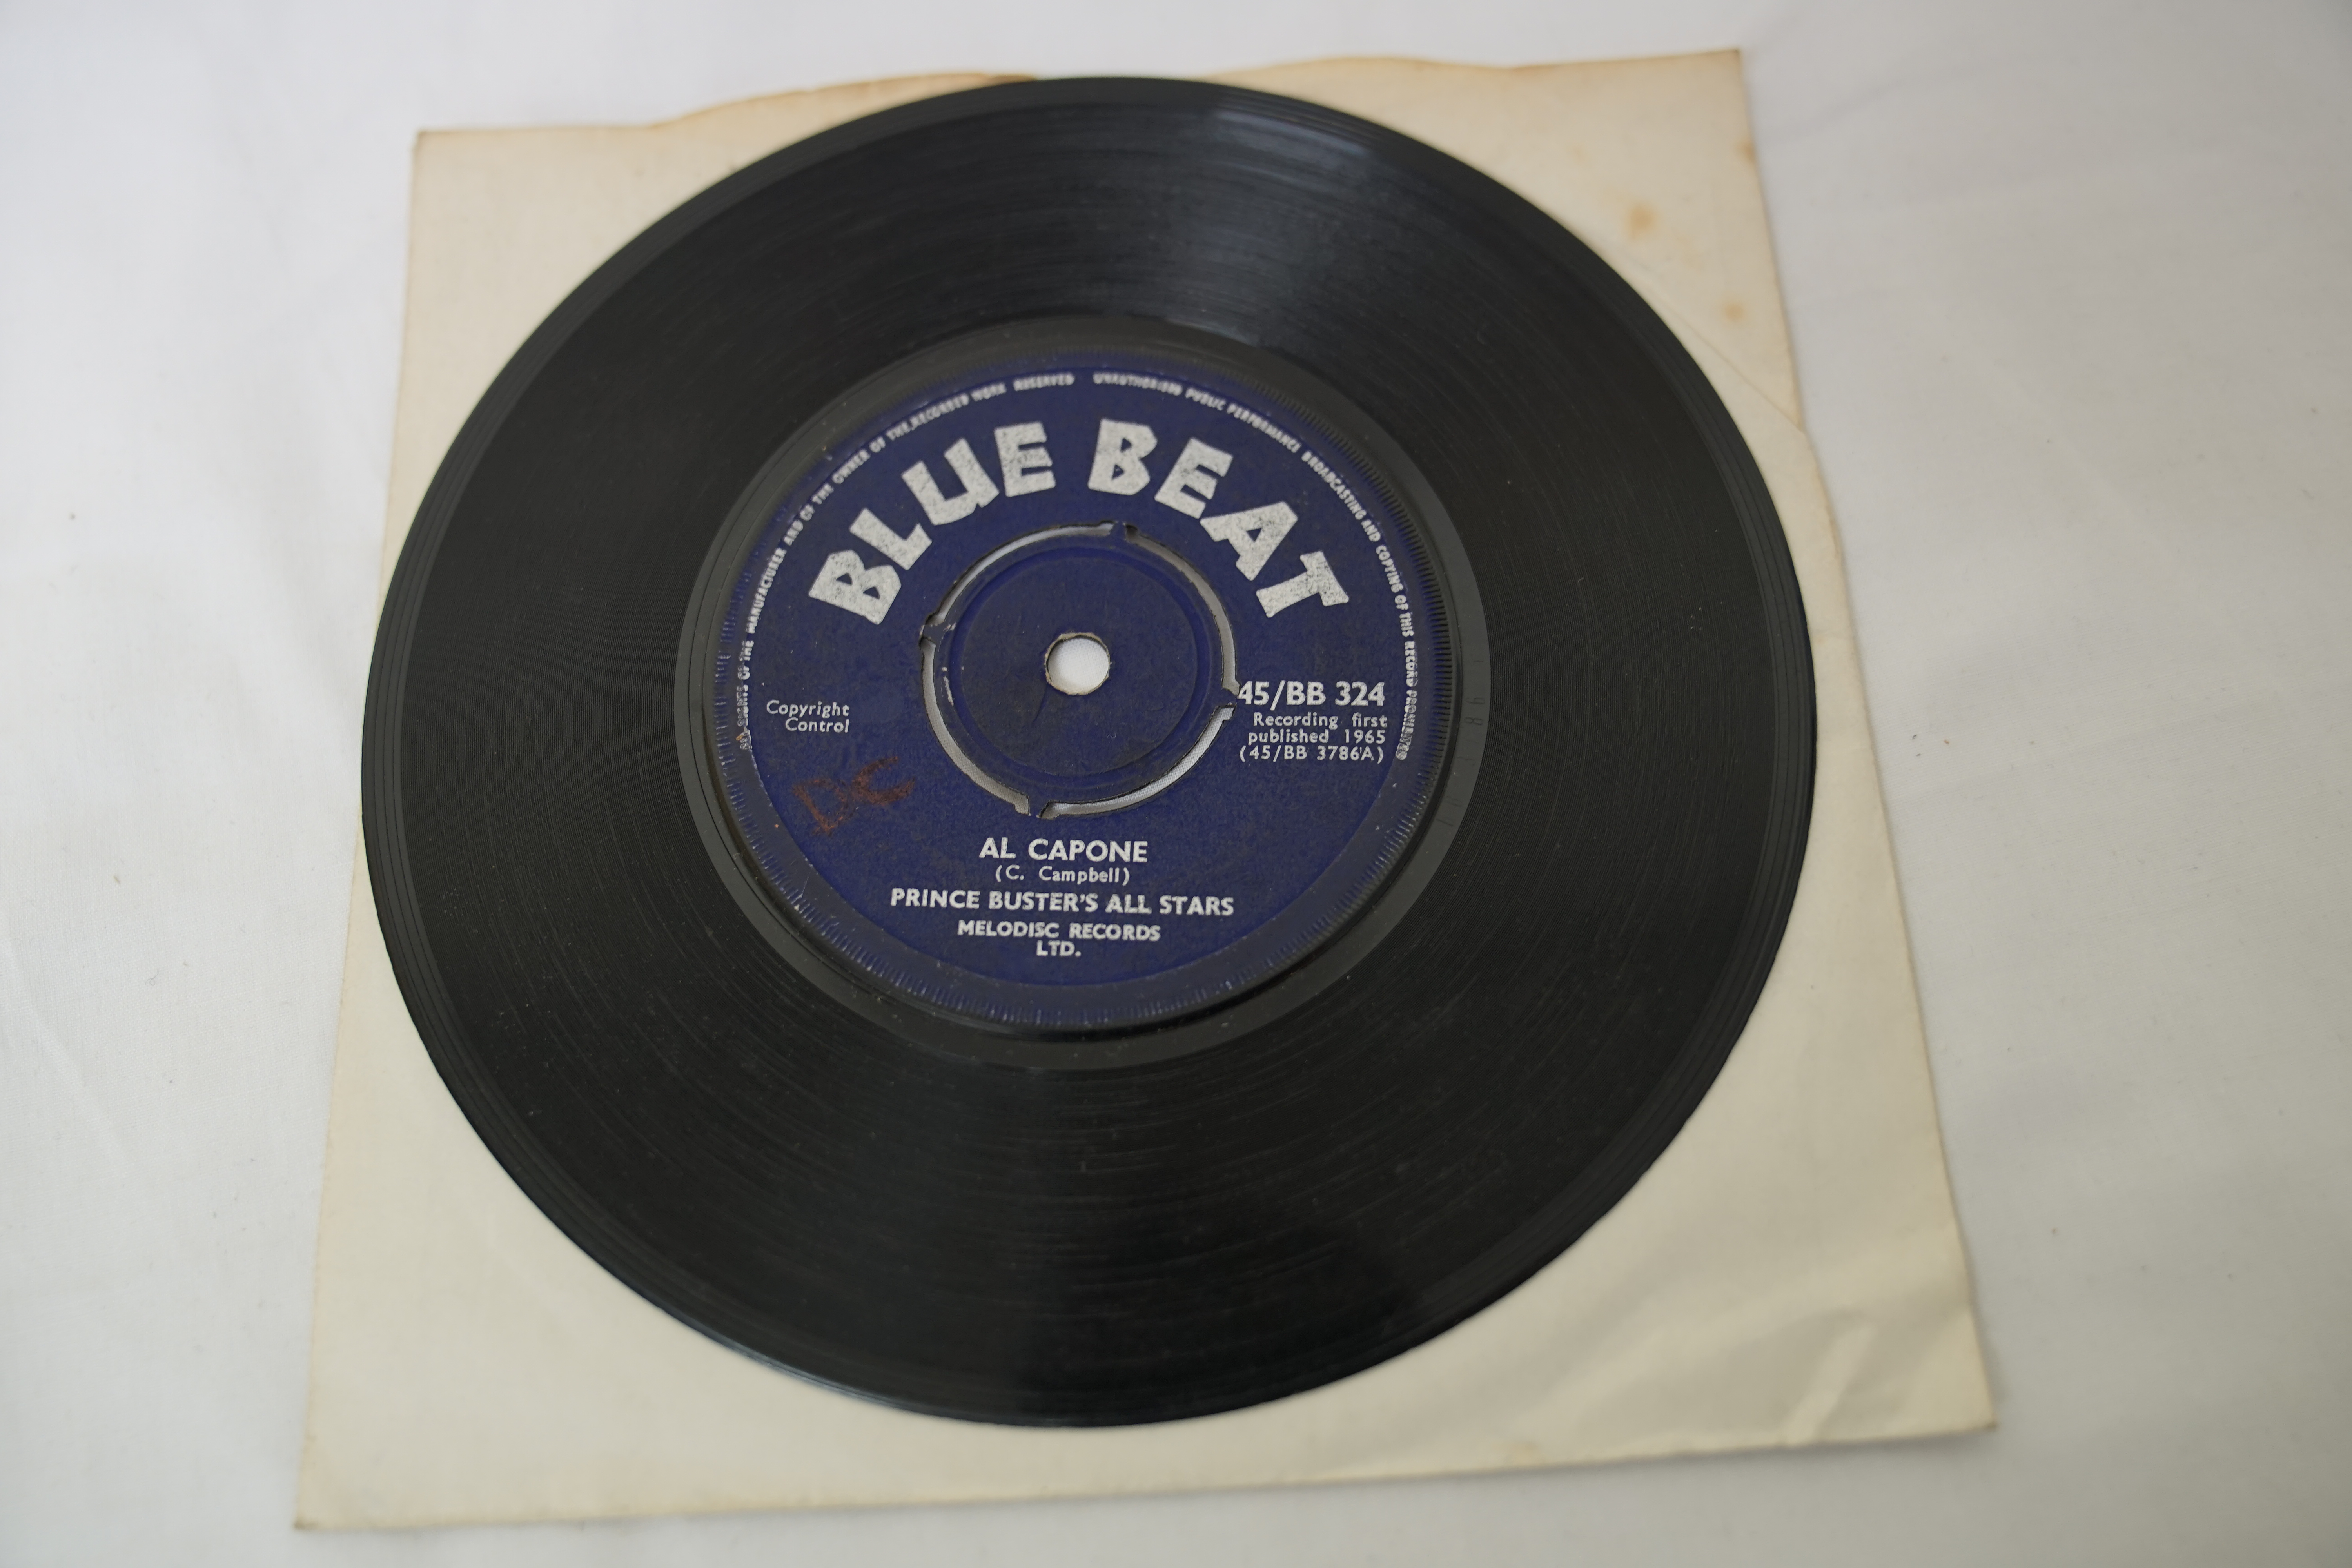 Vinyl - 6 UK Blue Beat Records / Prince Buster 7" singles, Reggae / Ska / Skinhead Reggae, - Image 3 of 25